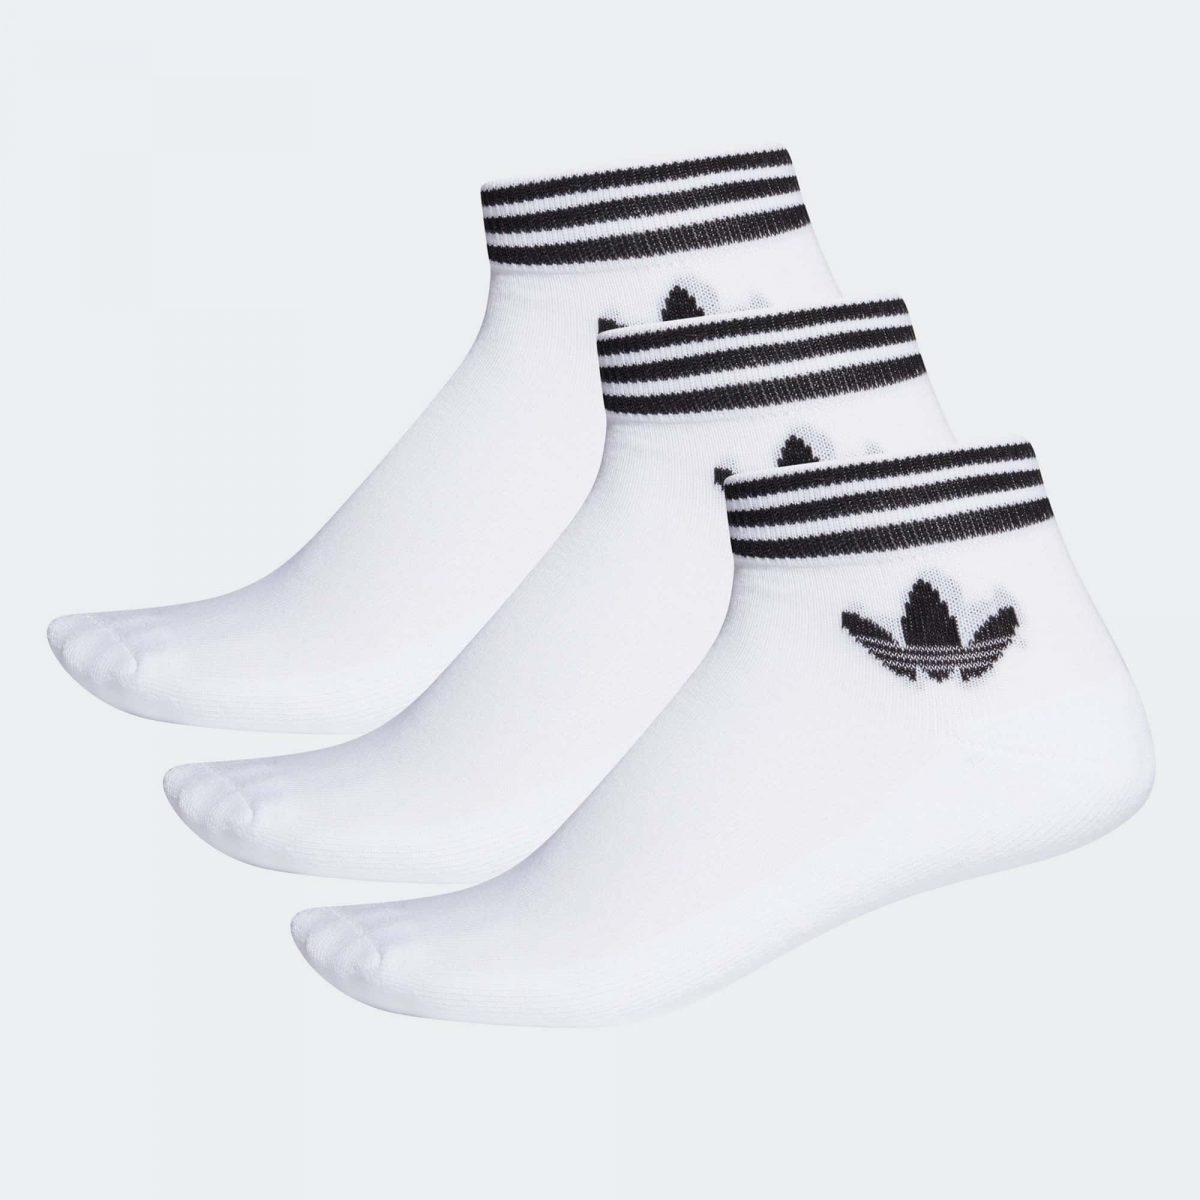 Носки  adidas TREFOIL ANKLE SOCKS черно-белые фото